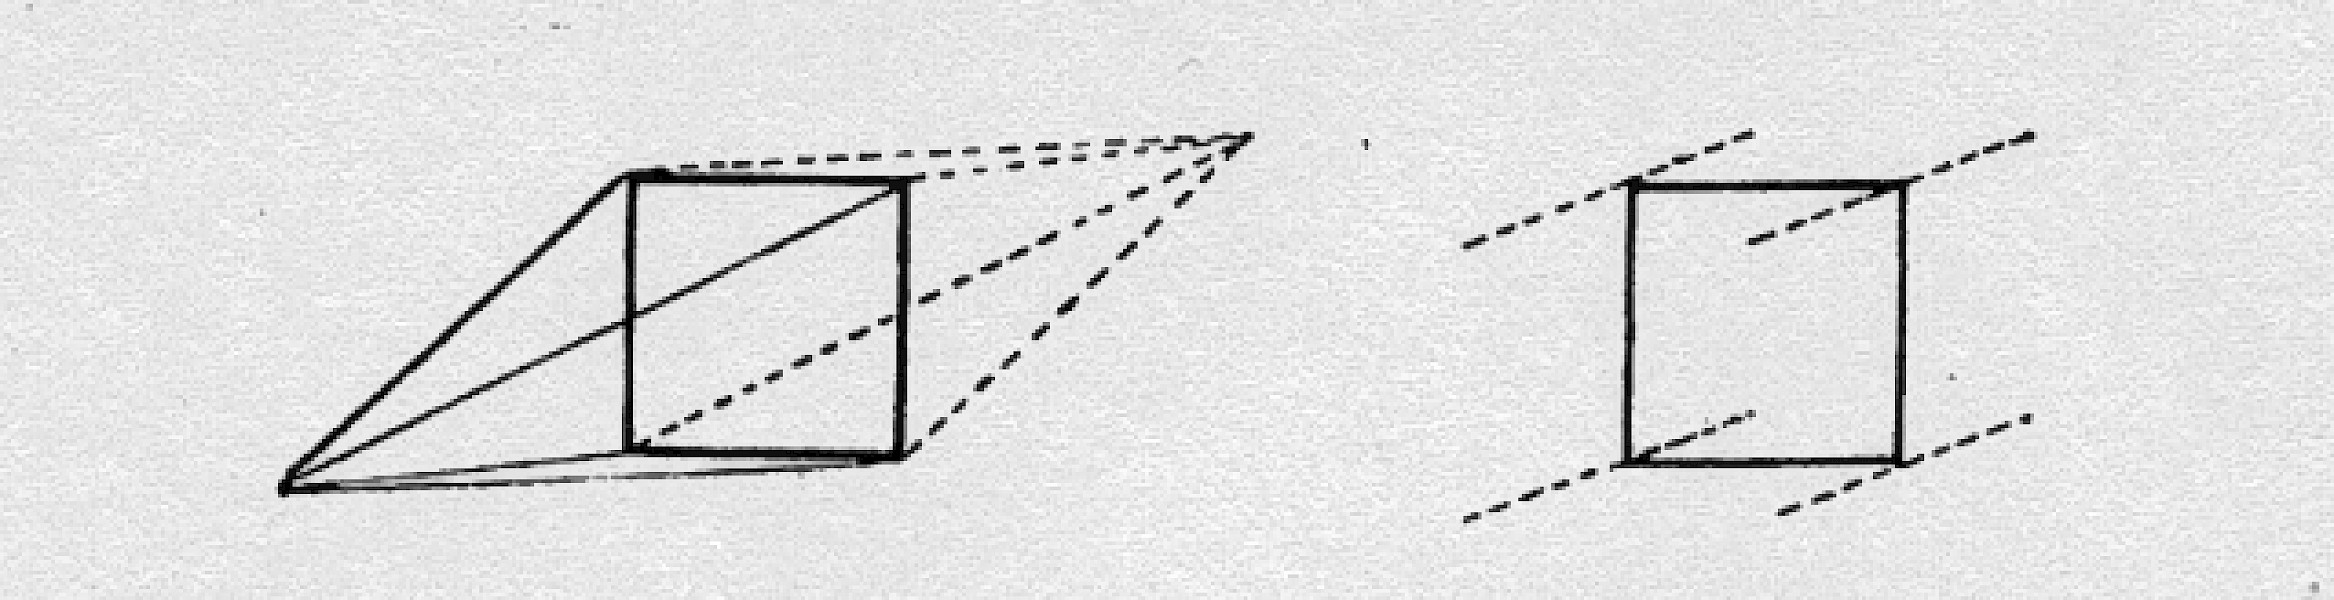 image6_a_and_pangeometry_el_lissitzky_1925.jpeg